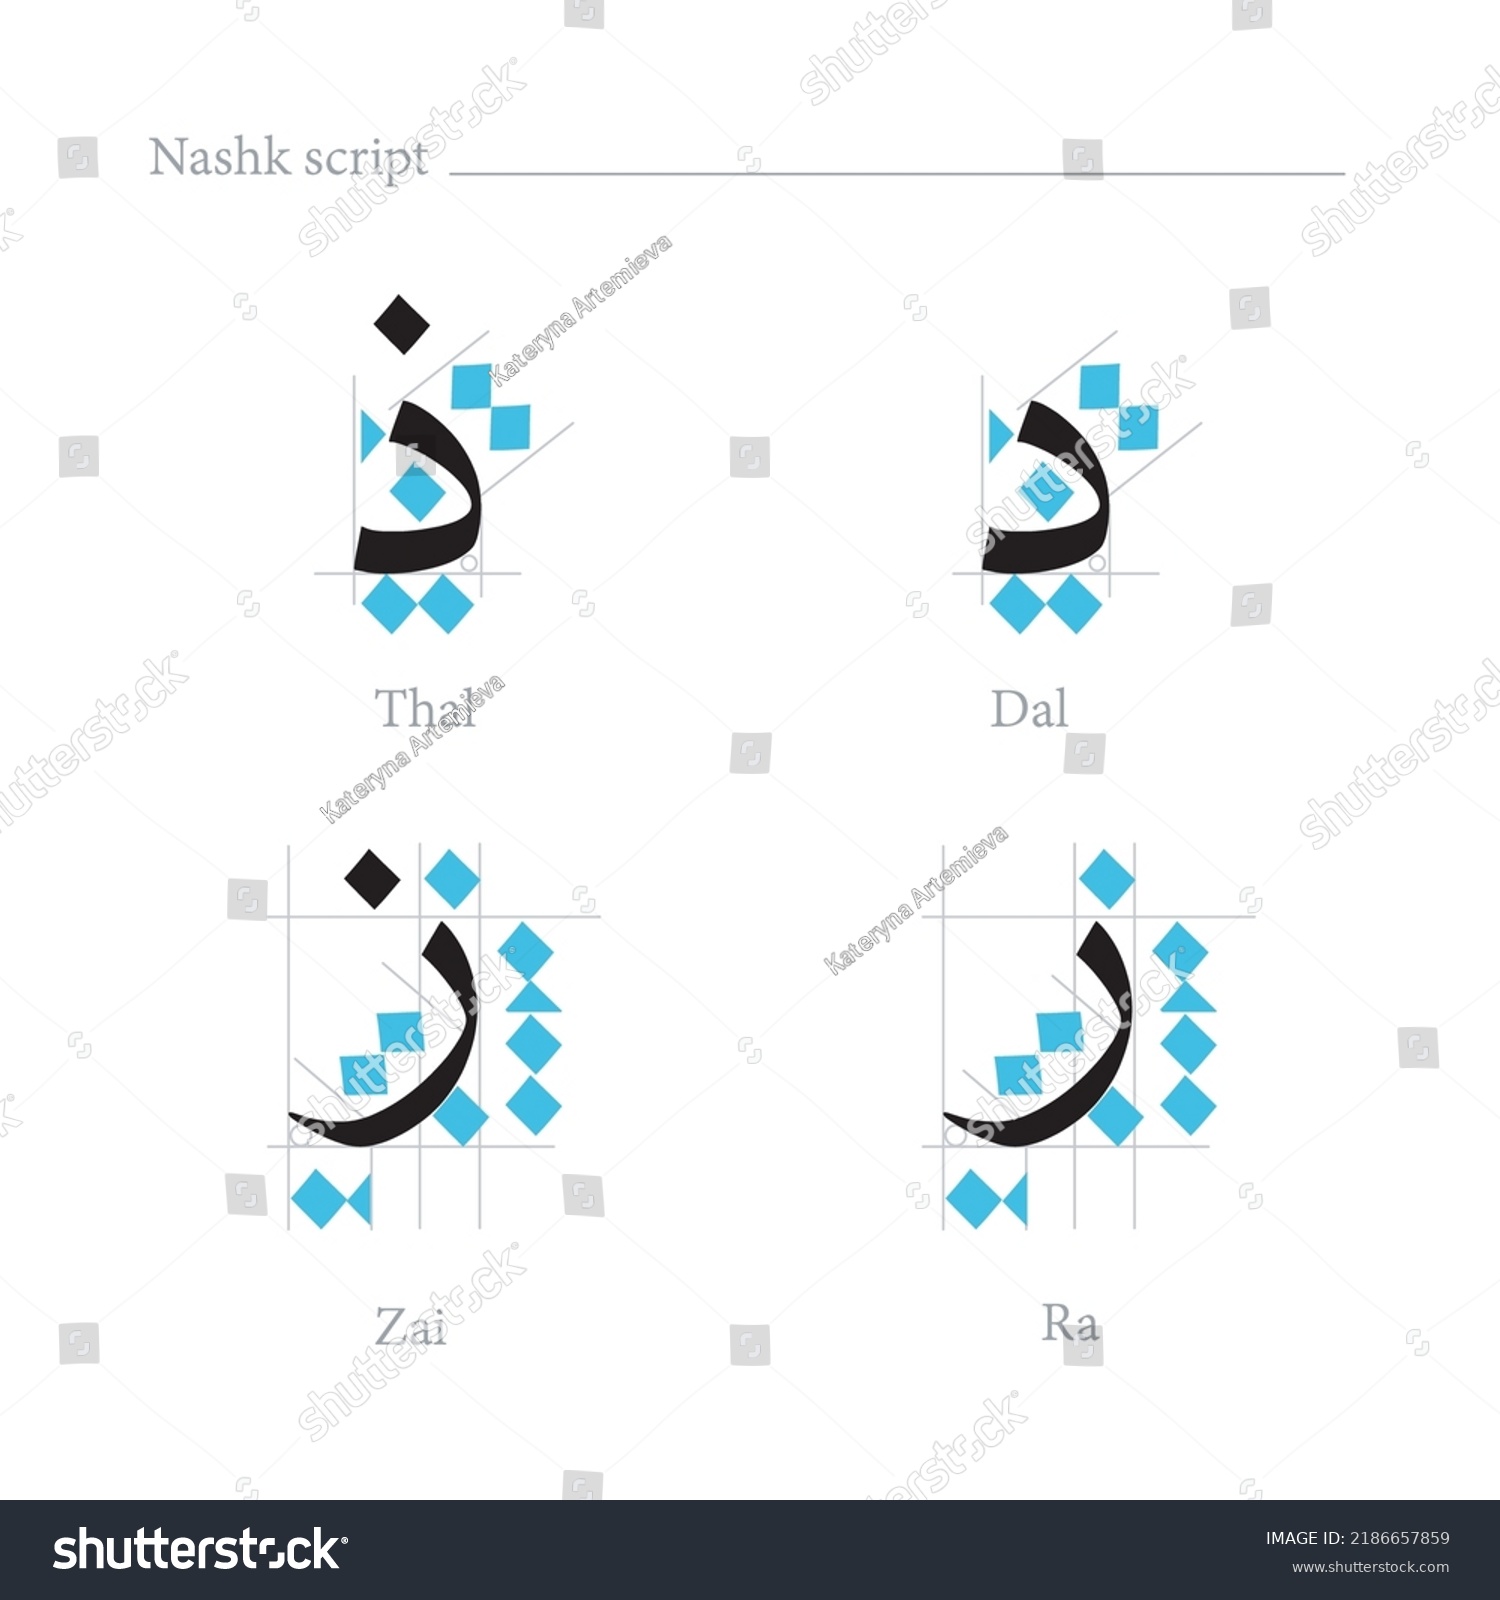 Arabic Alphabet Nashk Script Arabic Language Stock Vector (Royalty Free ...